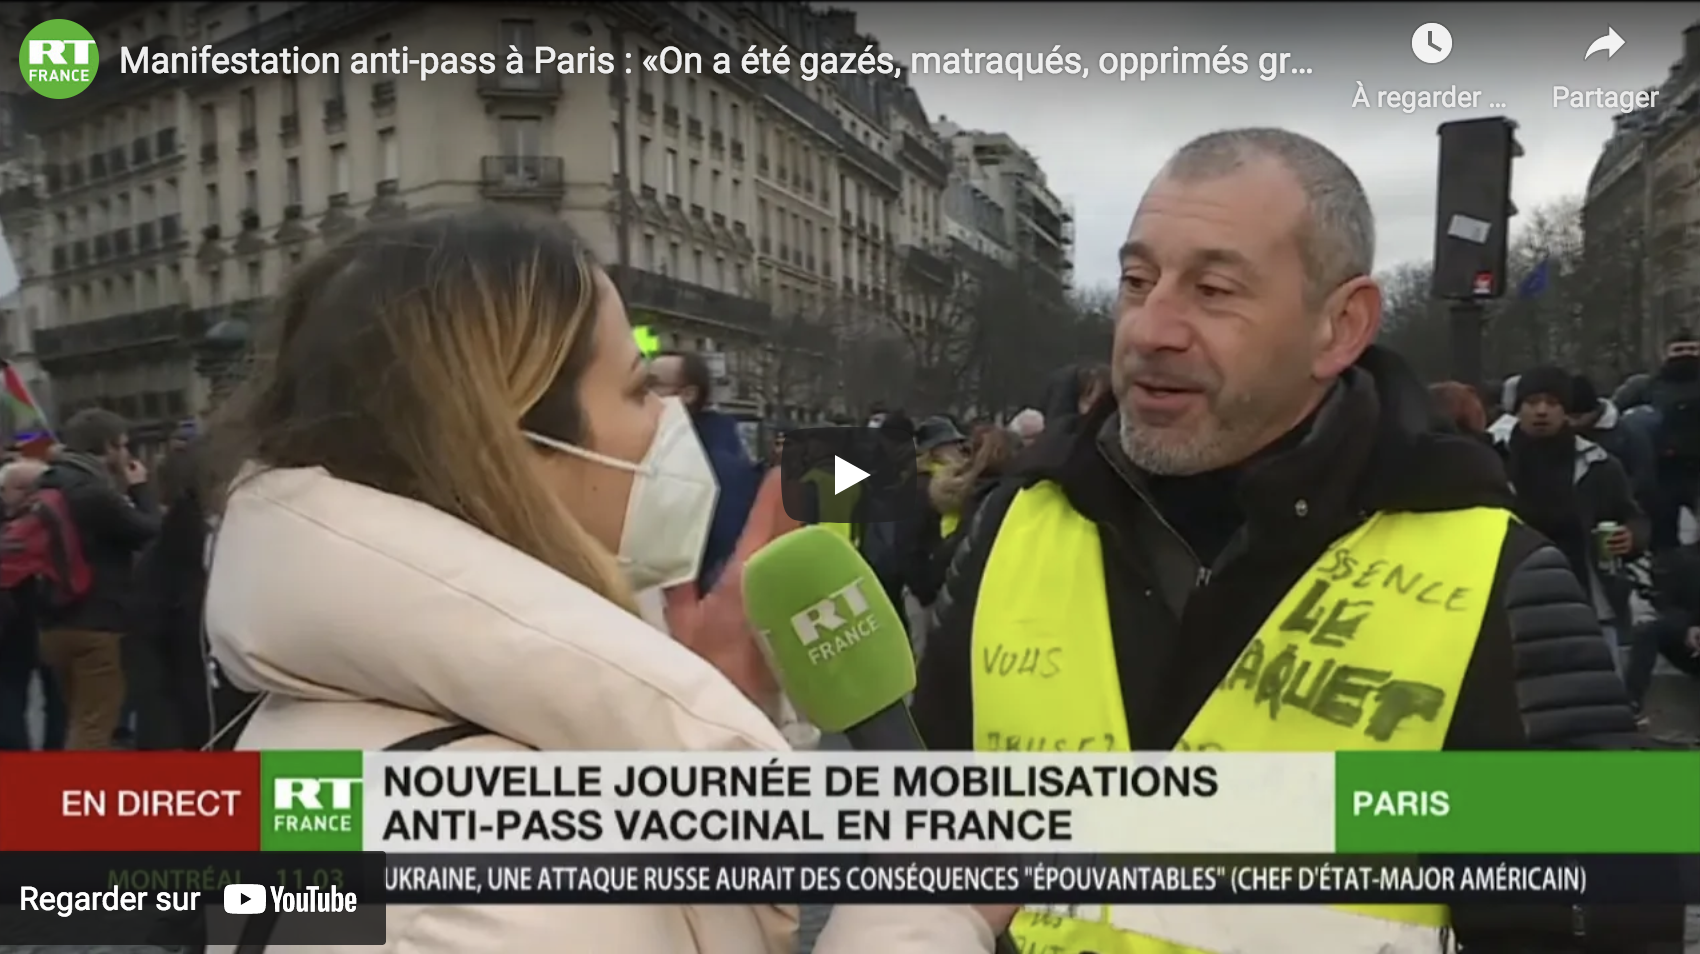 Manifestation anti-pass à Paris : « On a été gazés, matraqués, opprimés gratuitement » (VIDÉO)